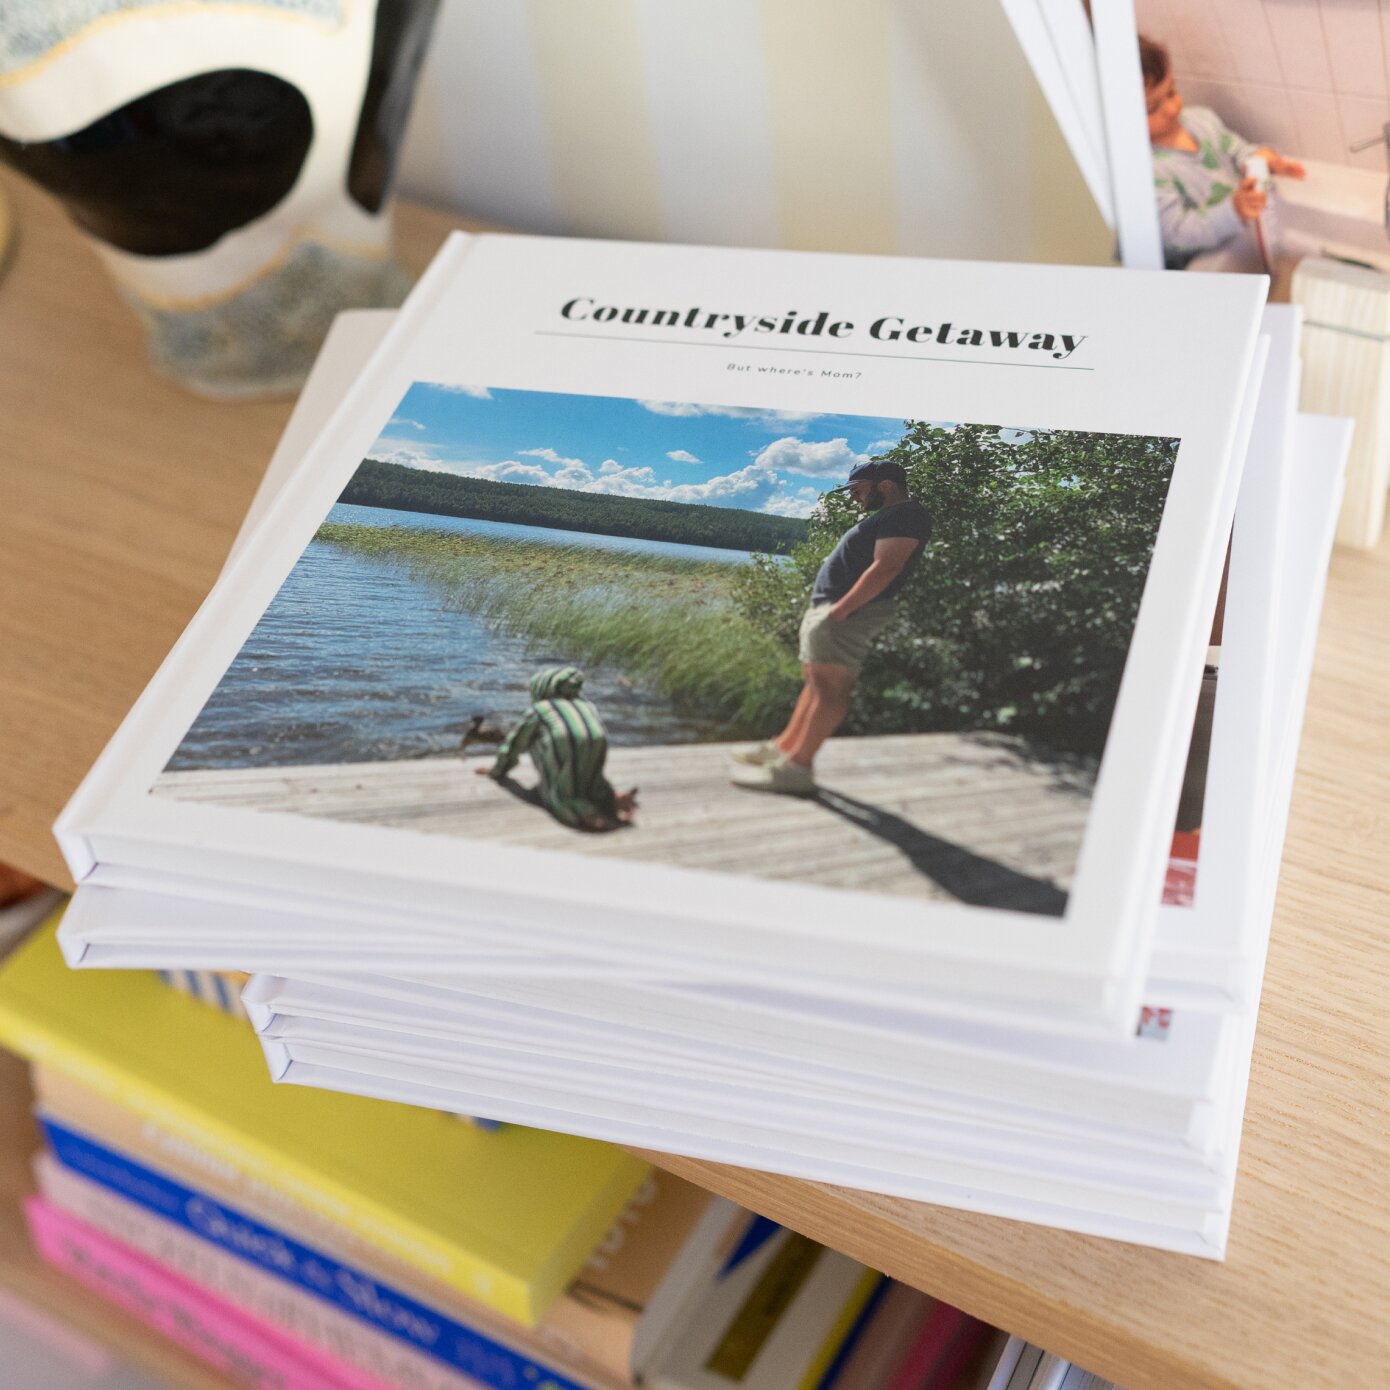 Pile of photobooks on a bookshelf, top book says "Countryside getaway".